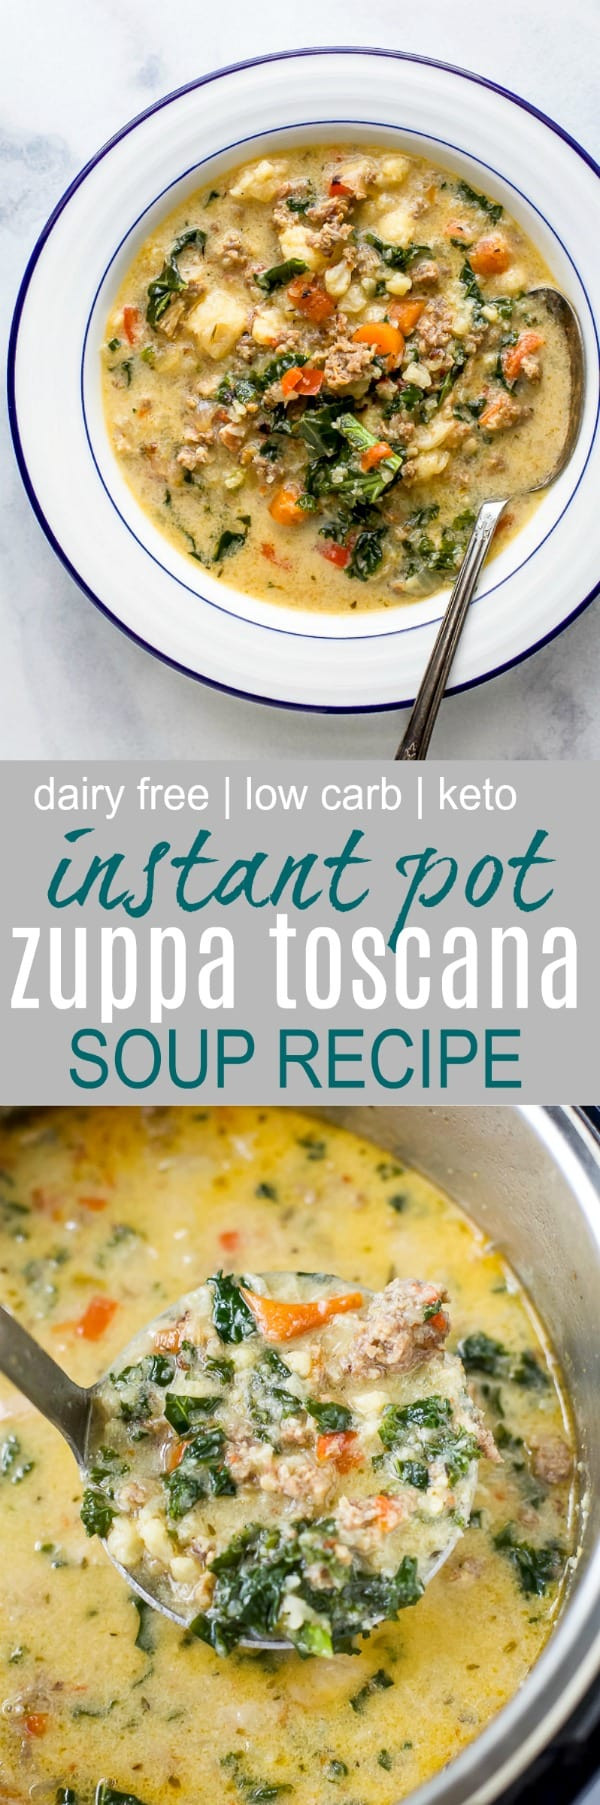 Instapot Keto Zuppa Toscana Soup
 Instant Pot Zuppa Toscana Soup